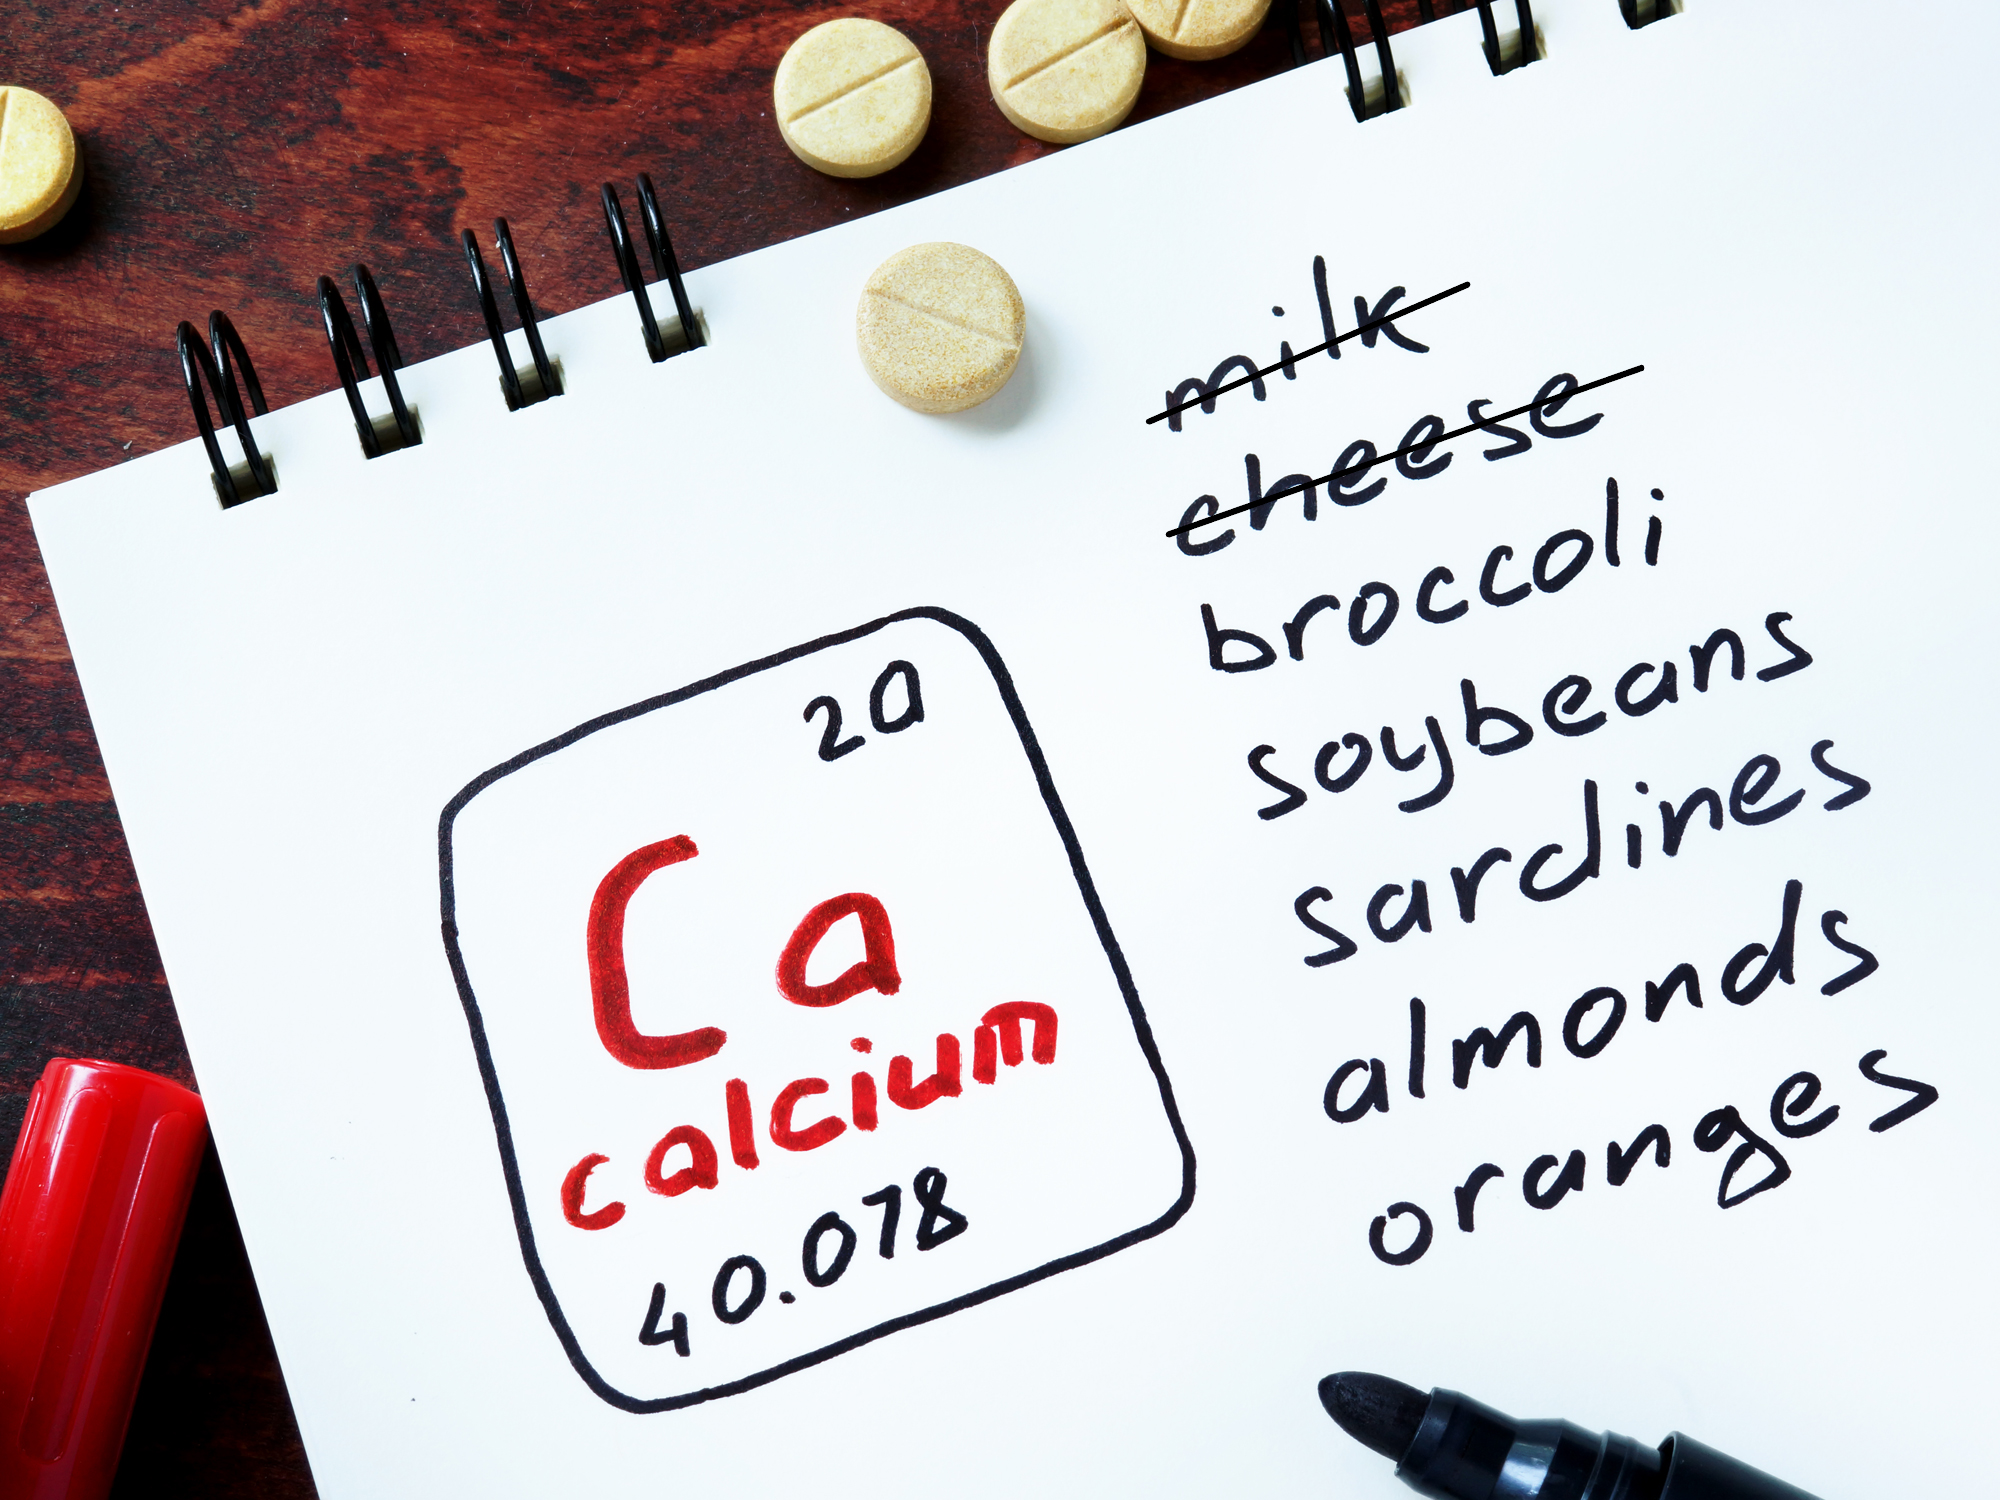 Non-dairy calcium-rich foods for super strong bones